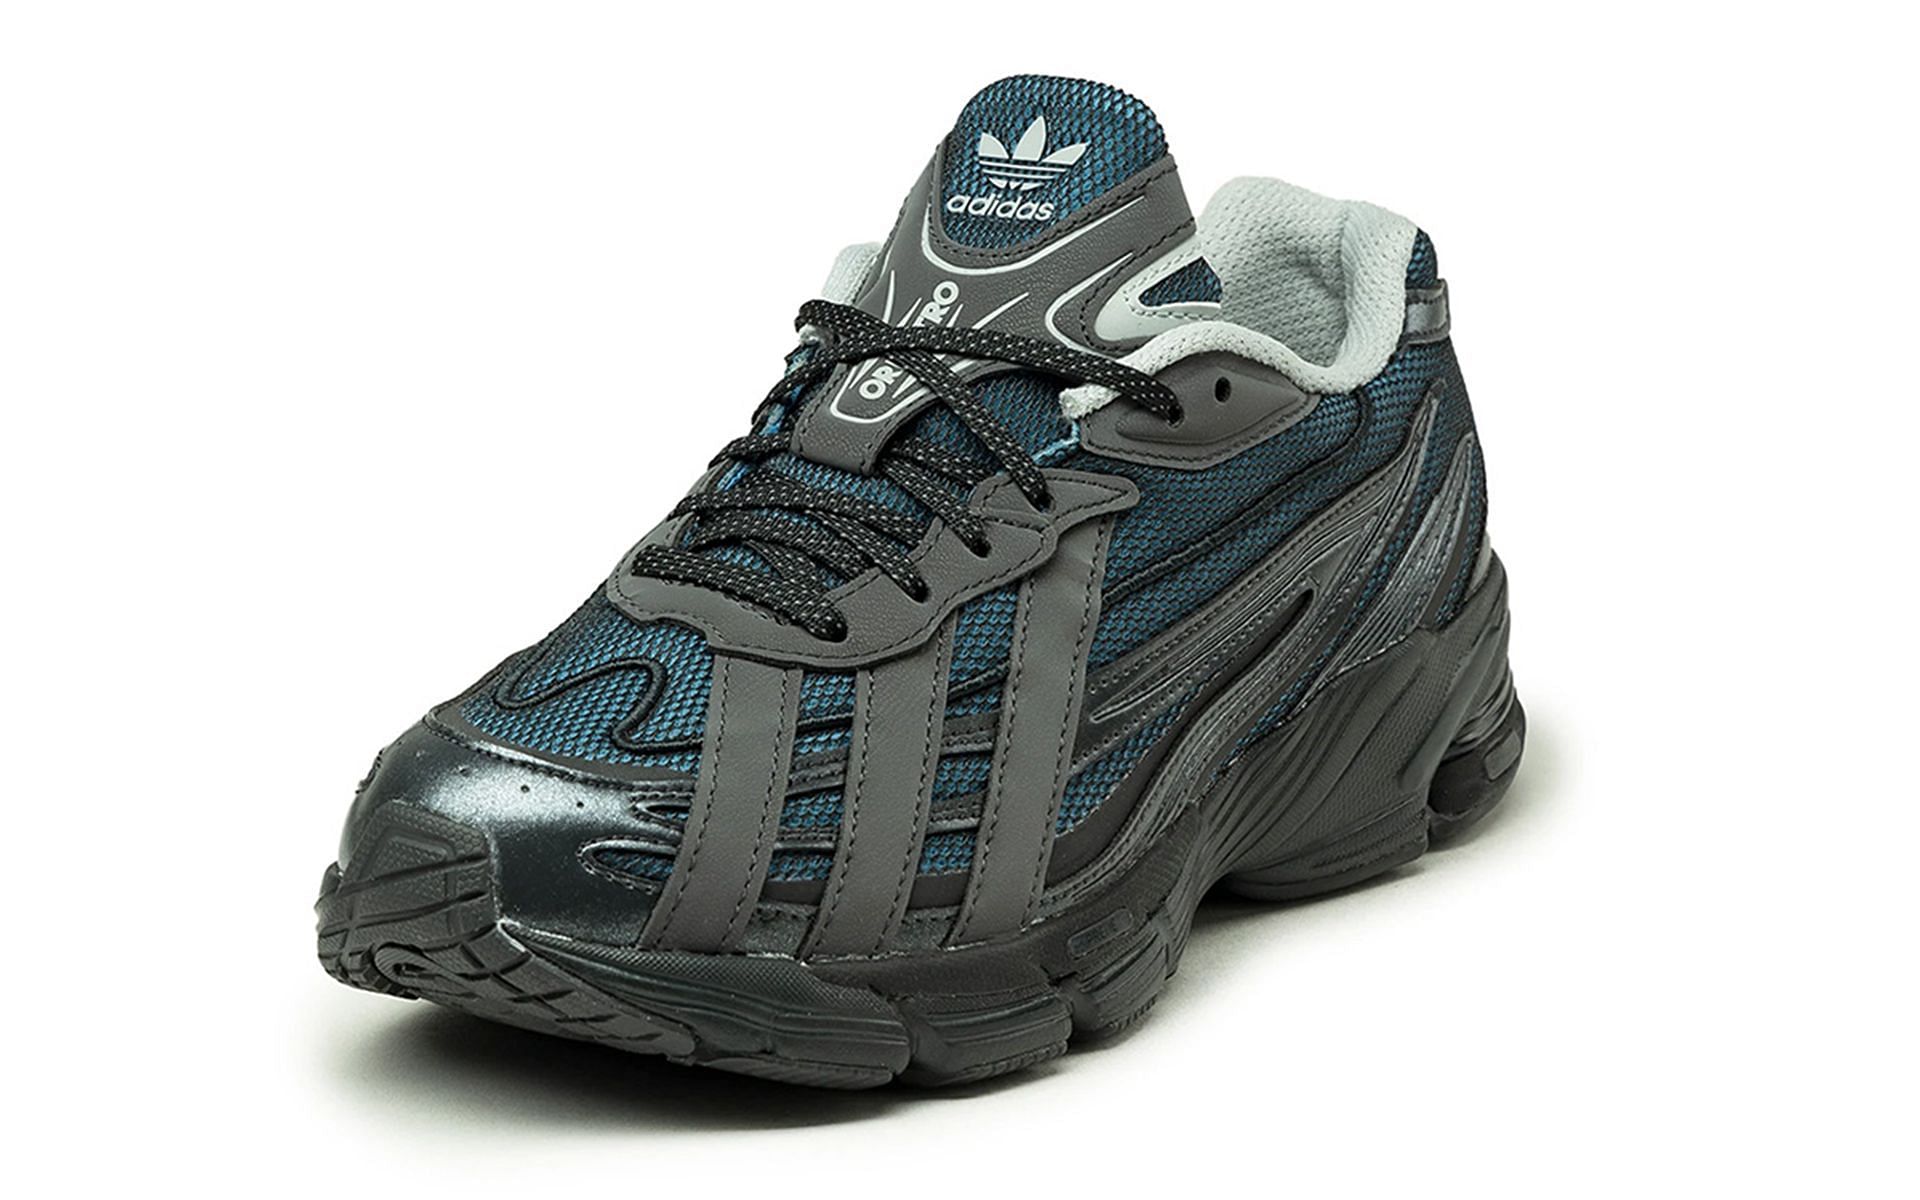 Adidas Orketro shoes (Image via Asphalt Gold)